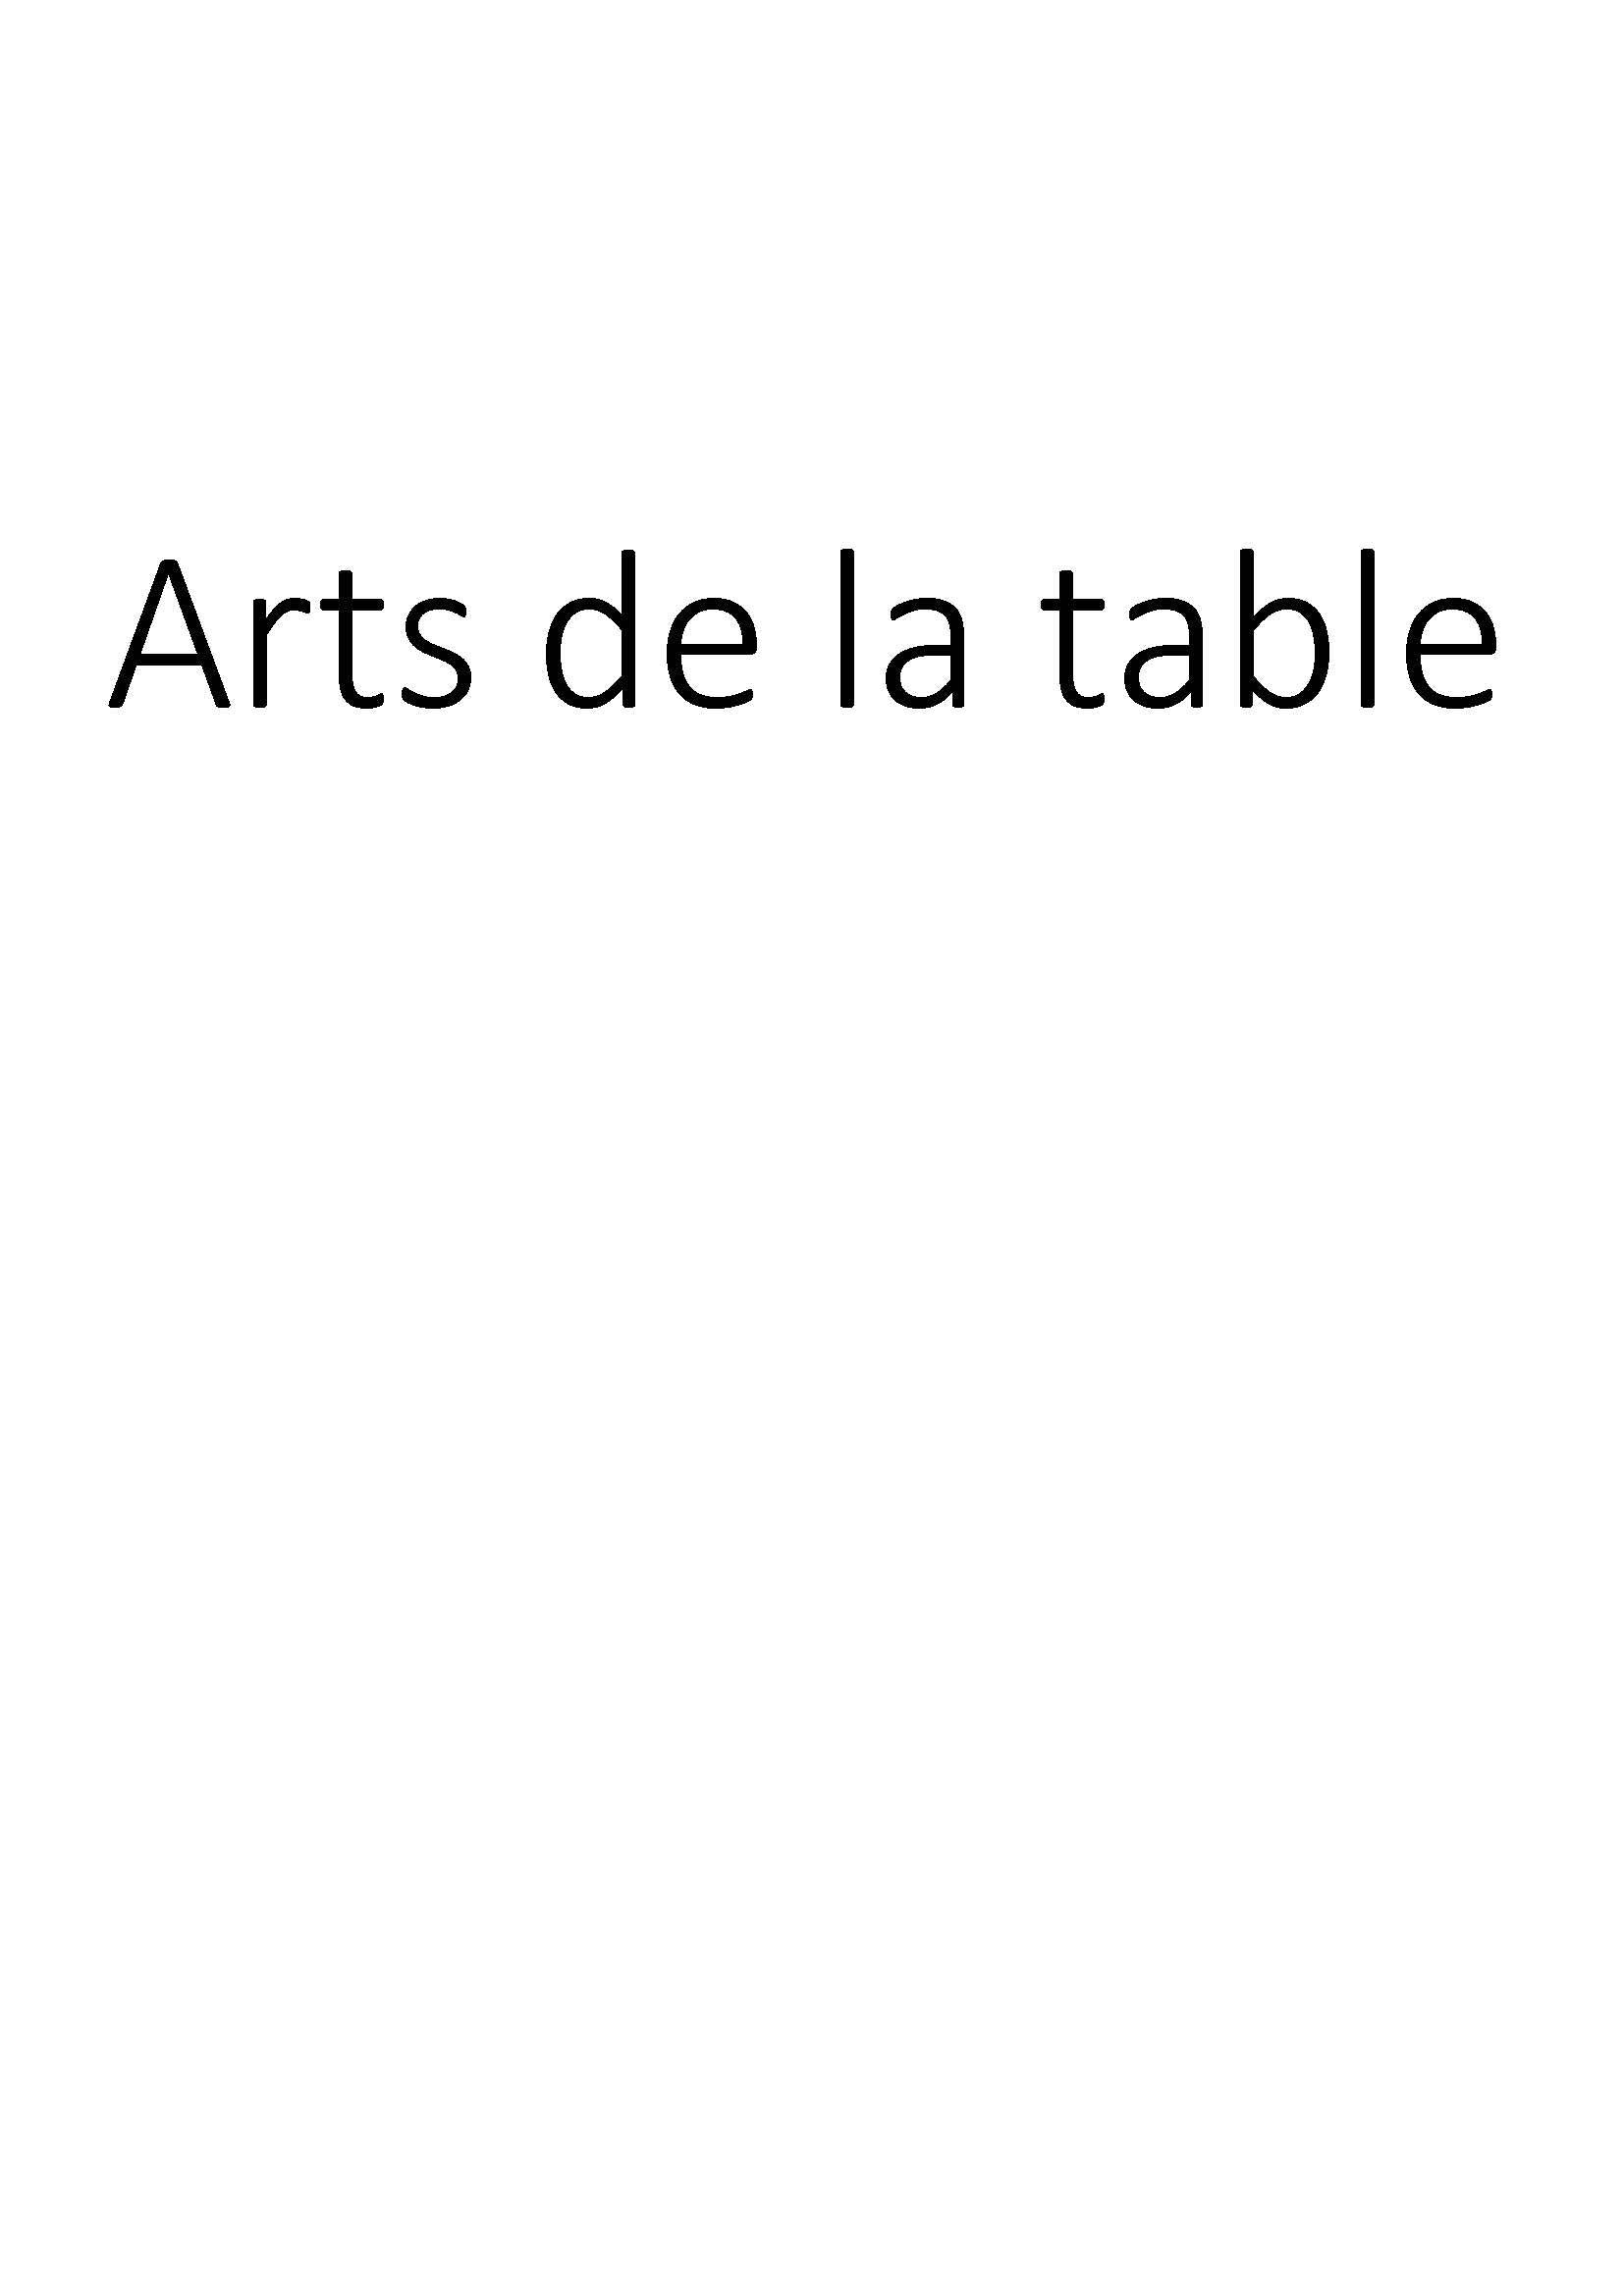 Arts de la table clicktofournisseur.com